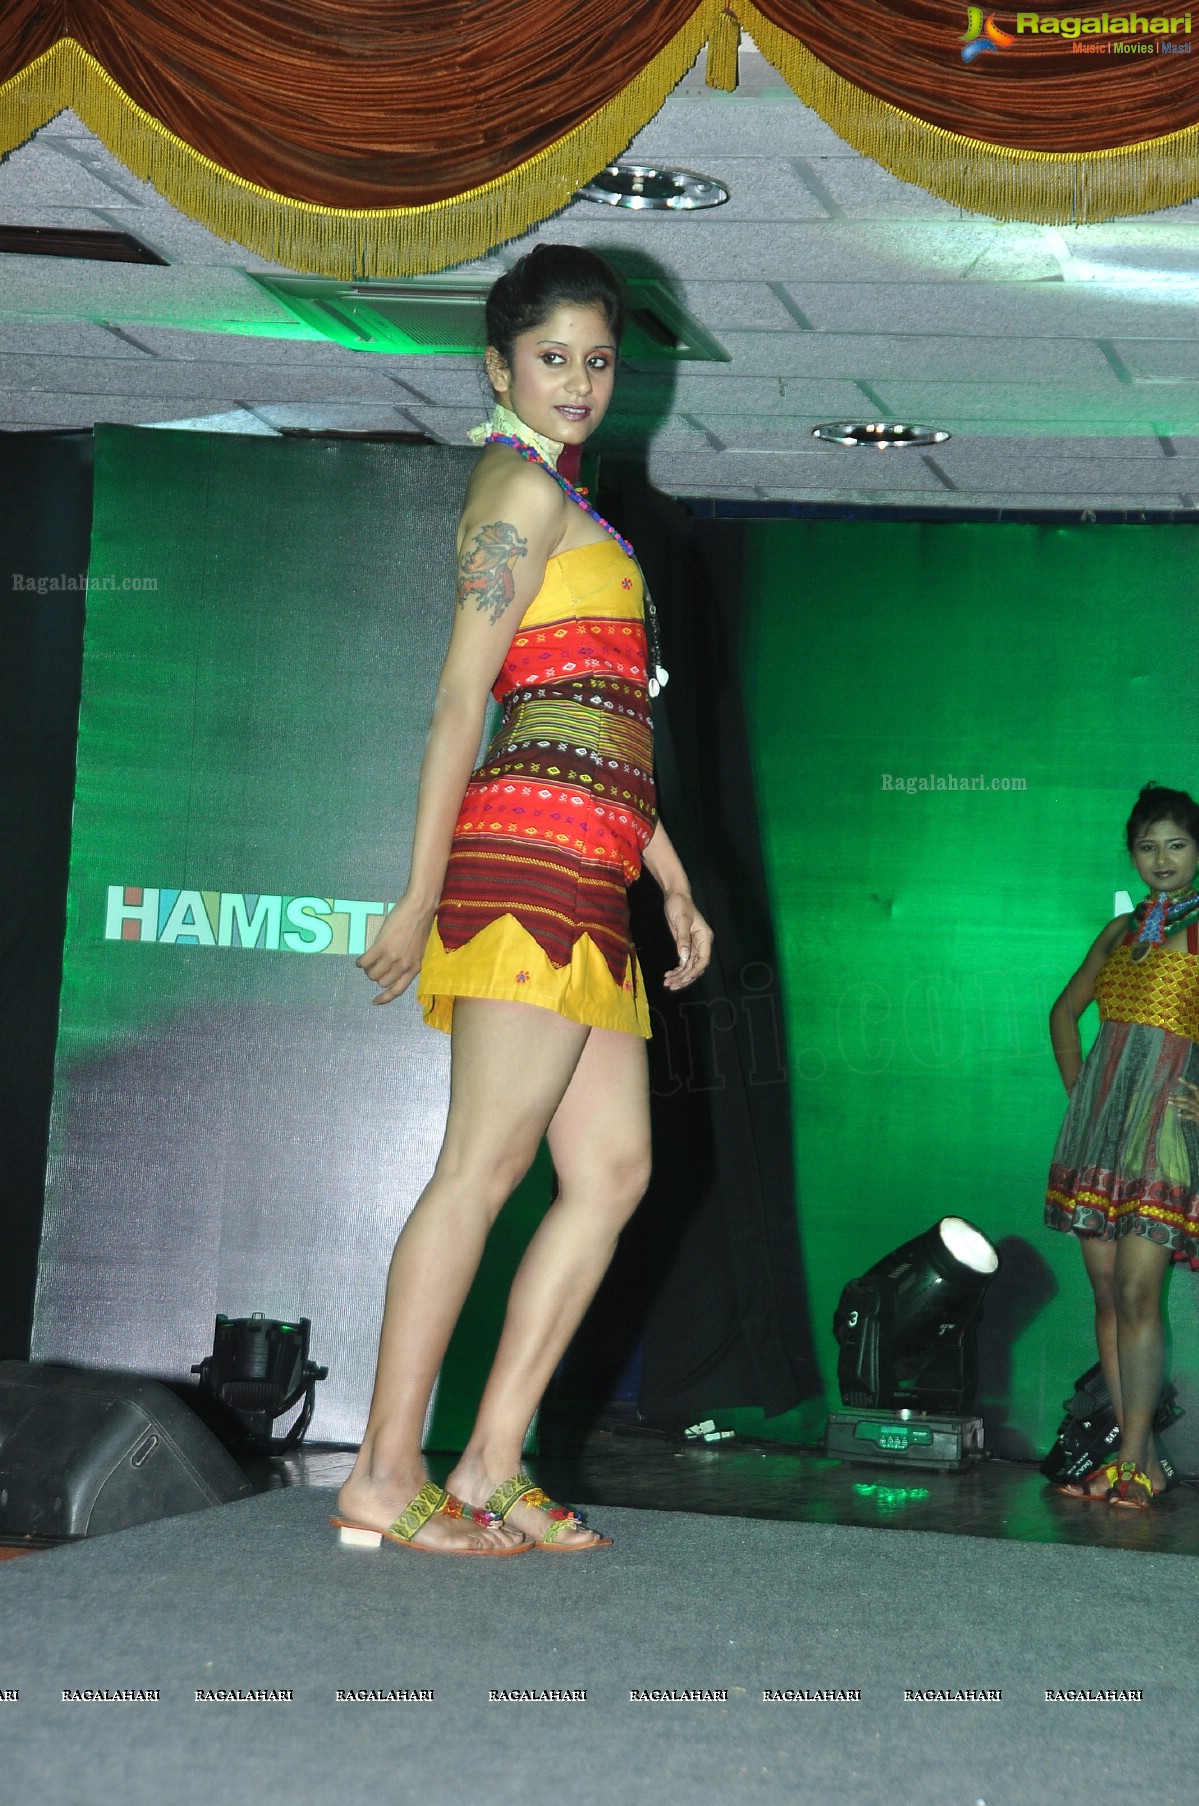 Hamstech Midterm Fashion Show 2013, Hyderabad